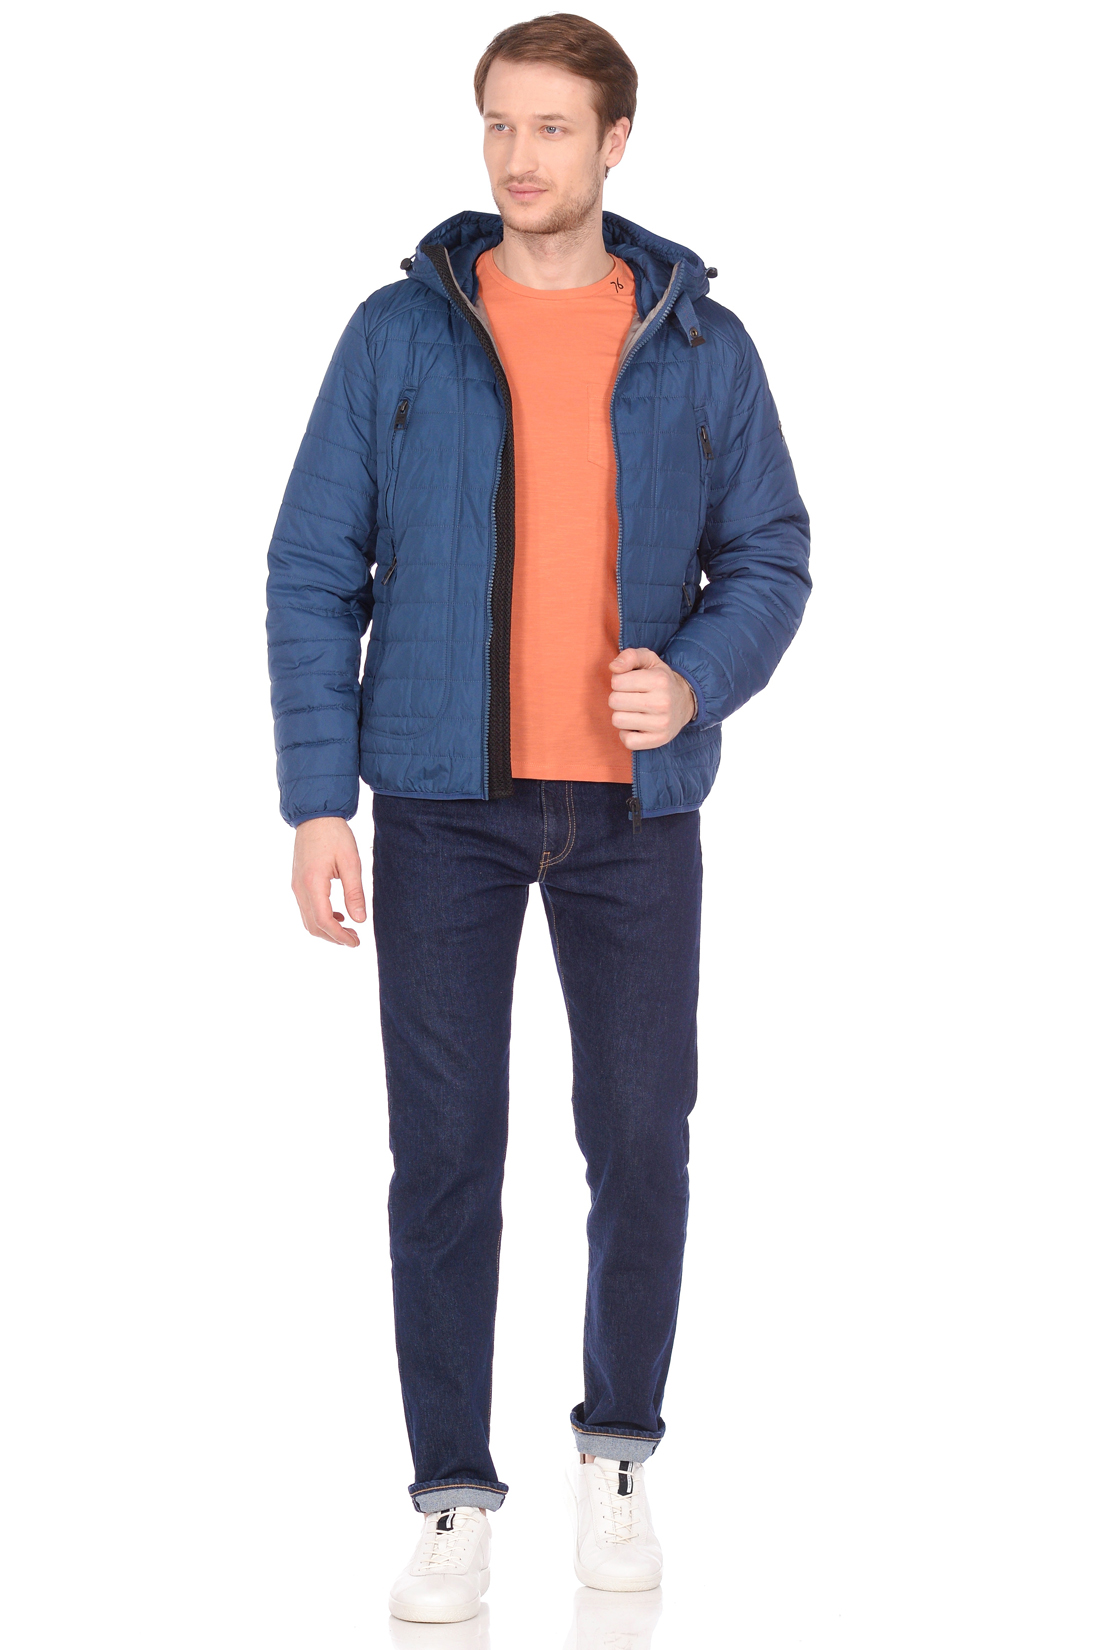 Куртка с двумя линиями карманов (арт. baon B539007), размер 3XL, цвет синий Куртка с двумя линиями карманов (арт. baon B539007) - фото 4